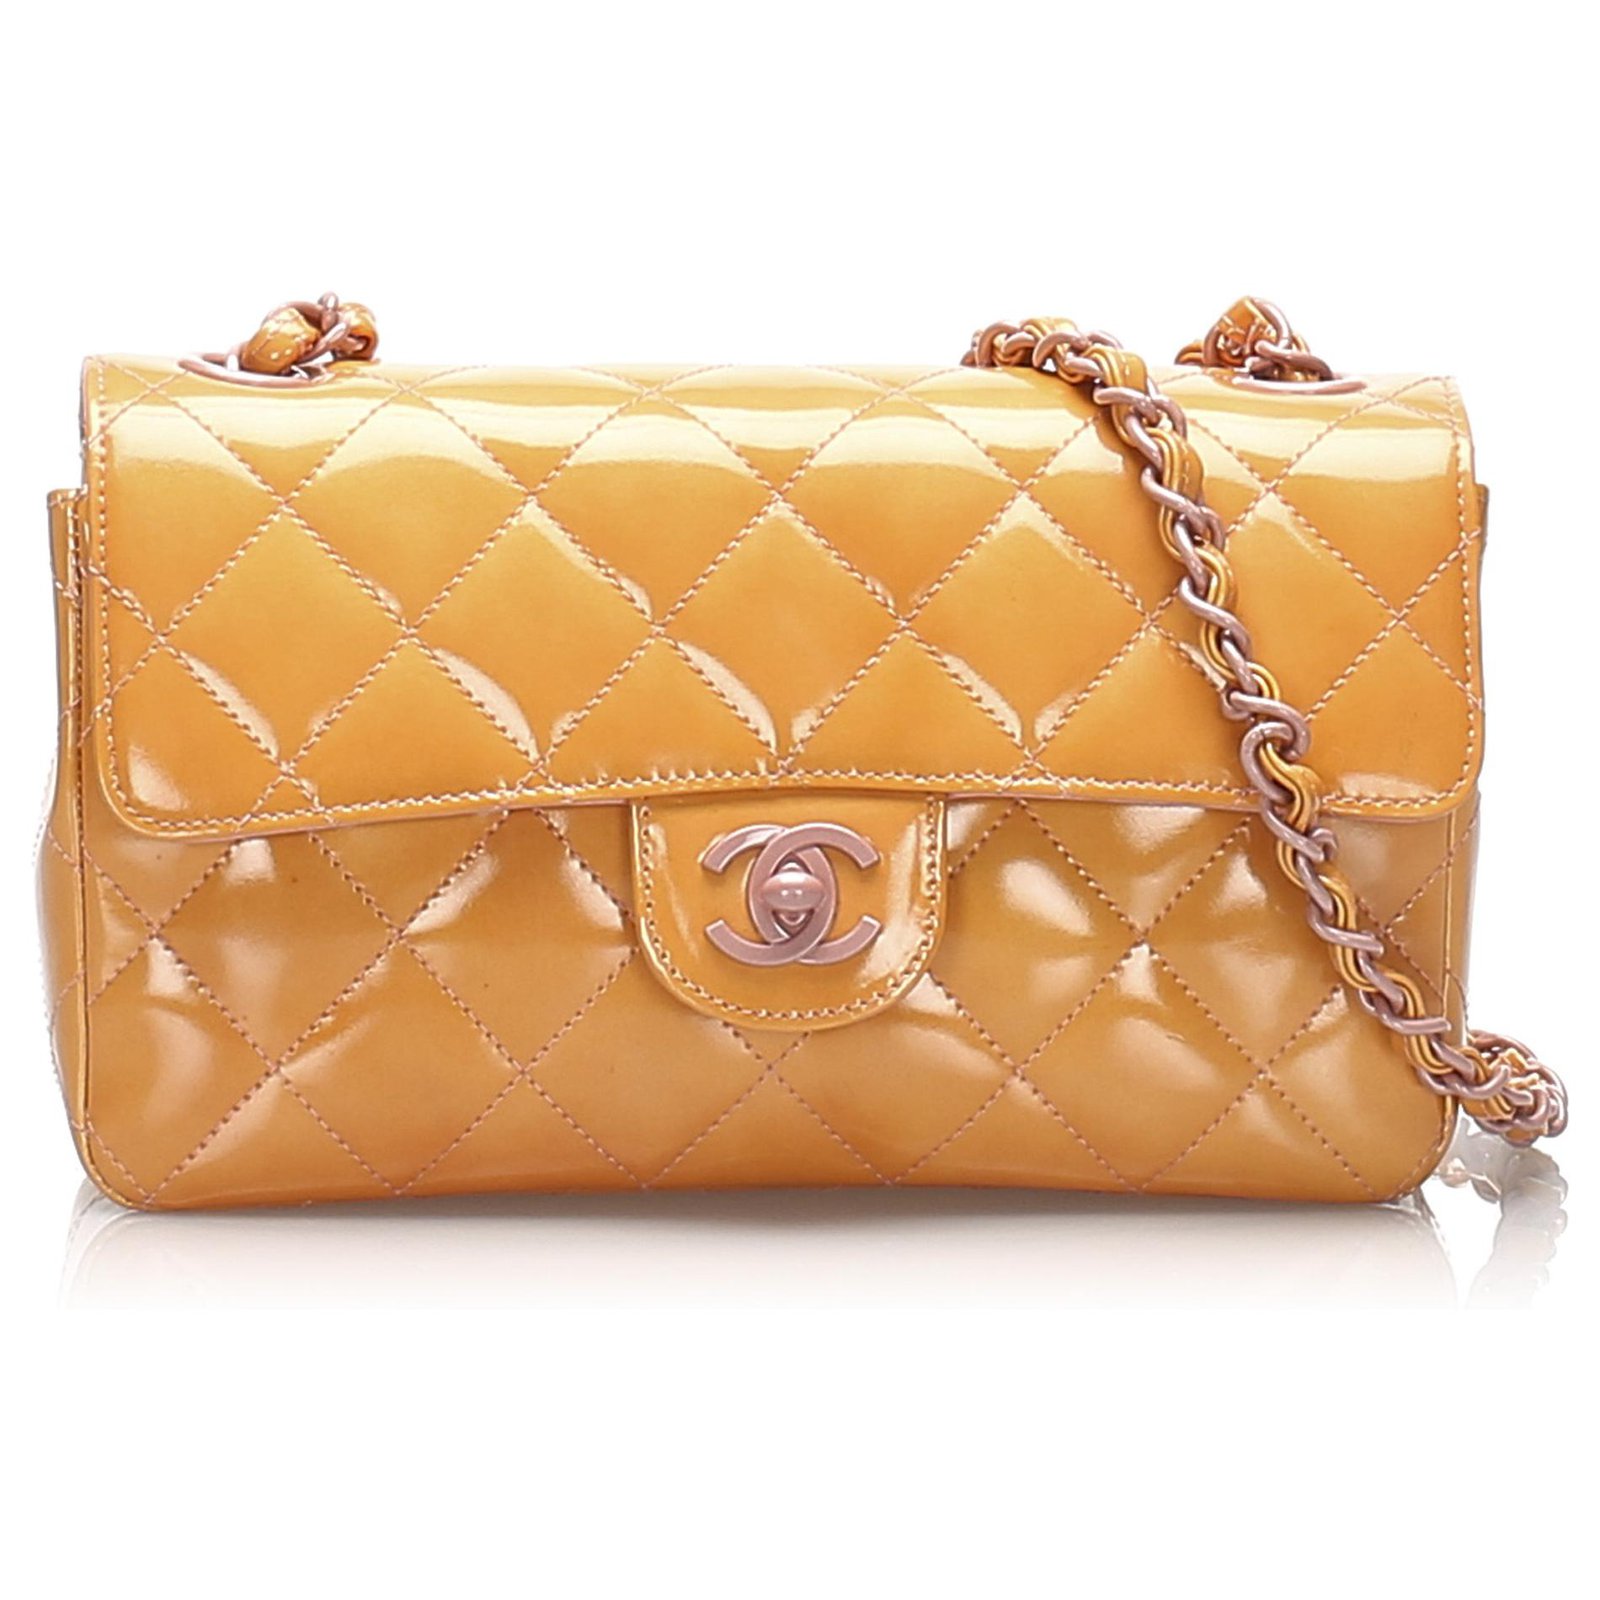 Chanel Orange Classic New Mini Patent Leather Single Flap Bag Pink